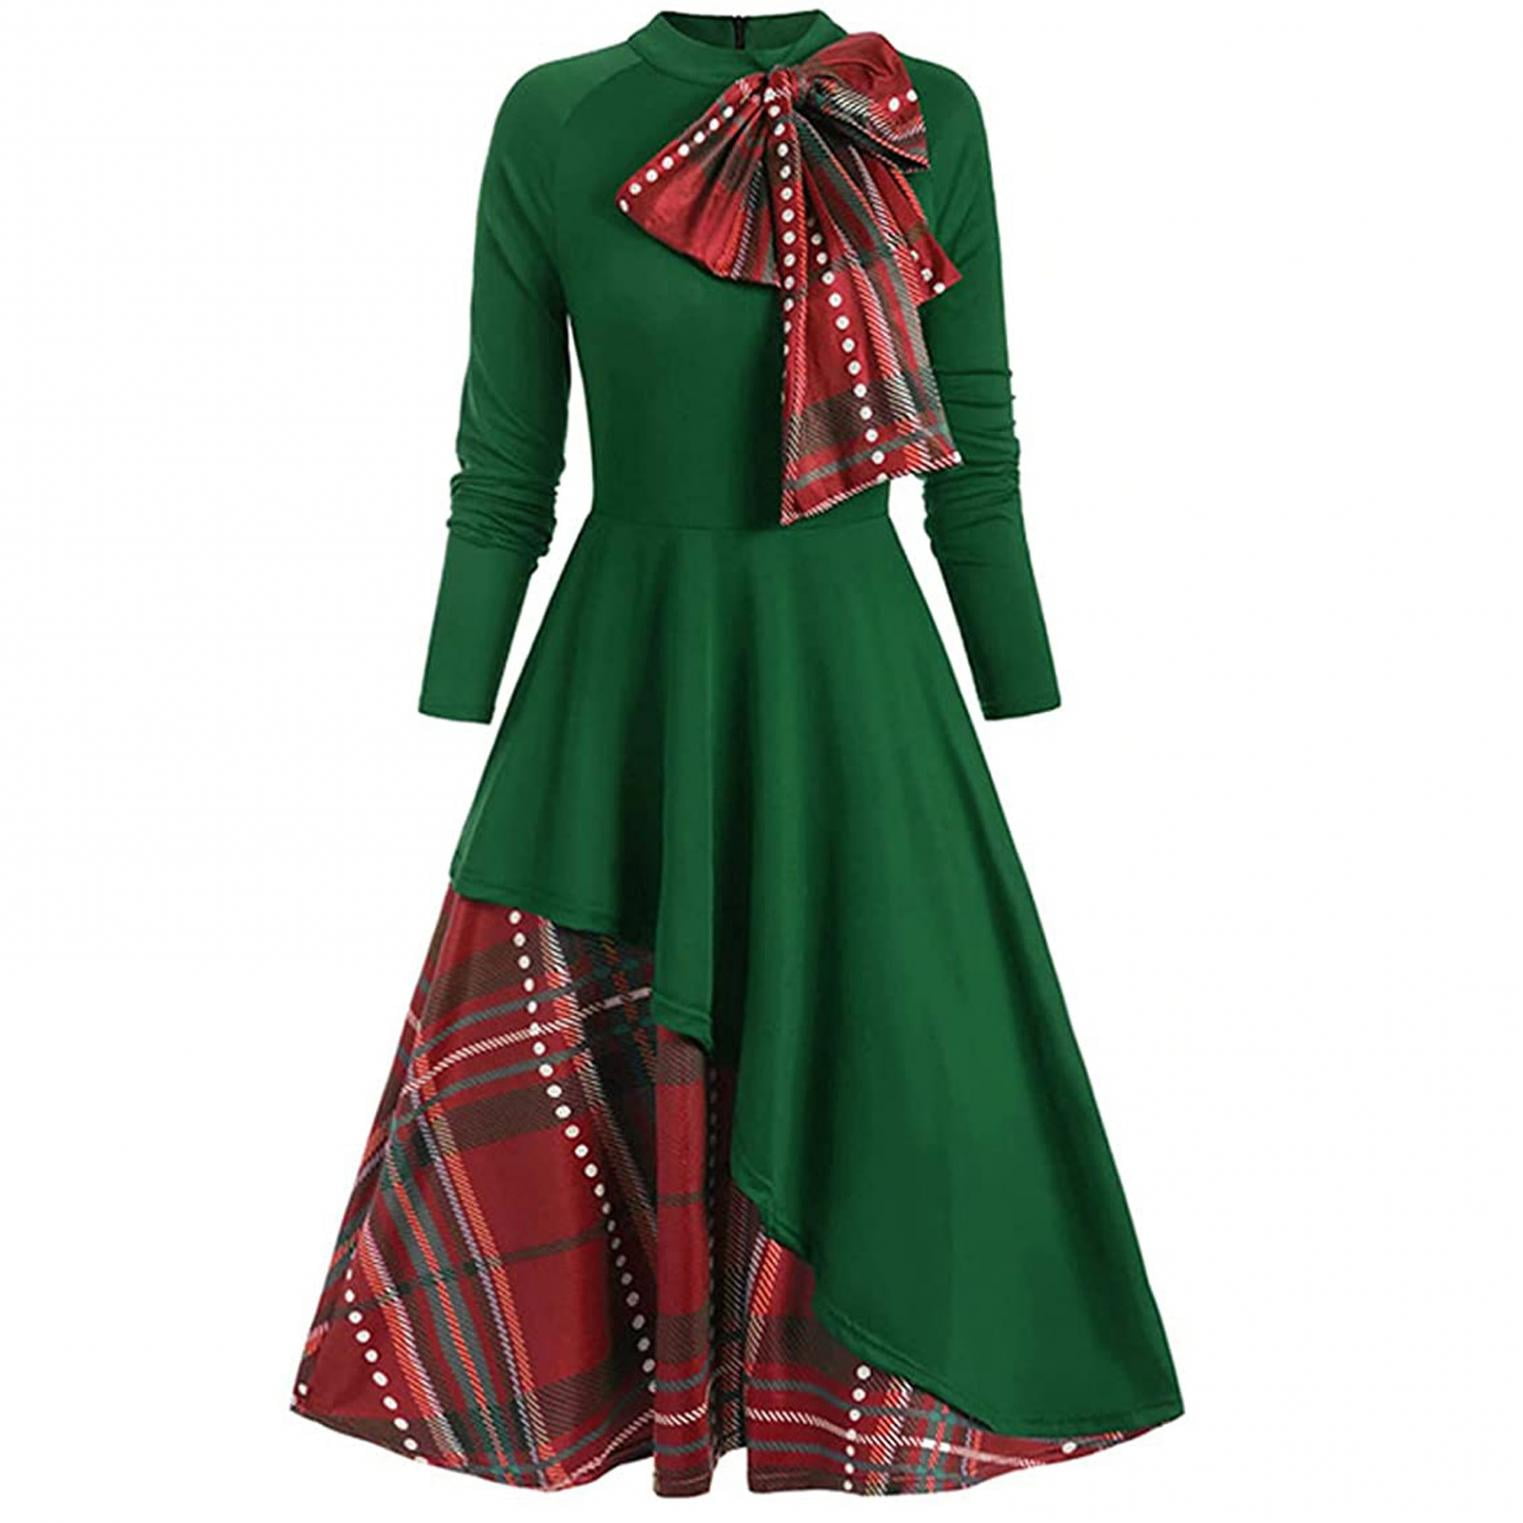 Tuscom Christmas Dresses for Women,Plus ...